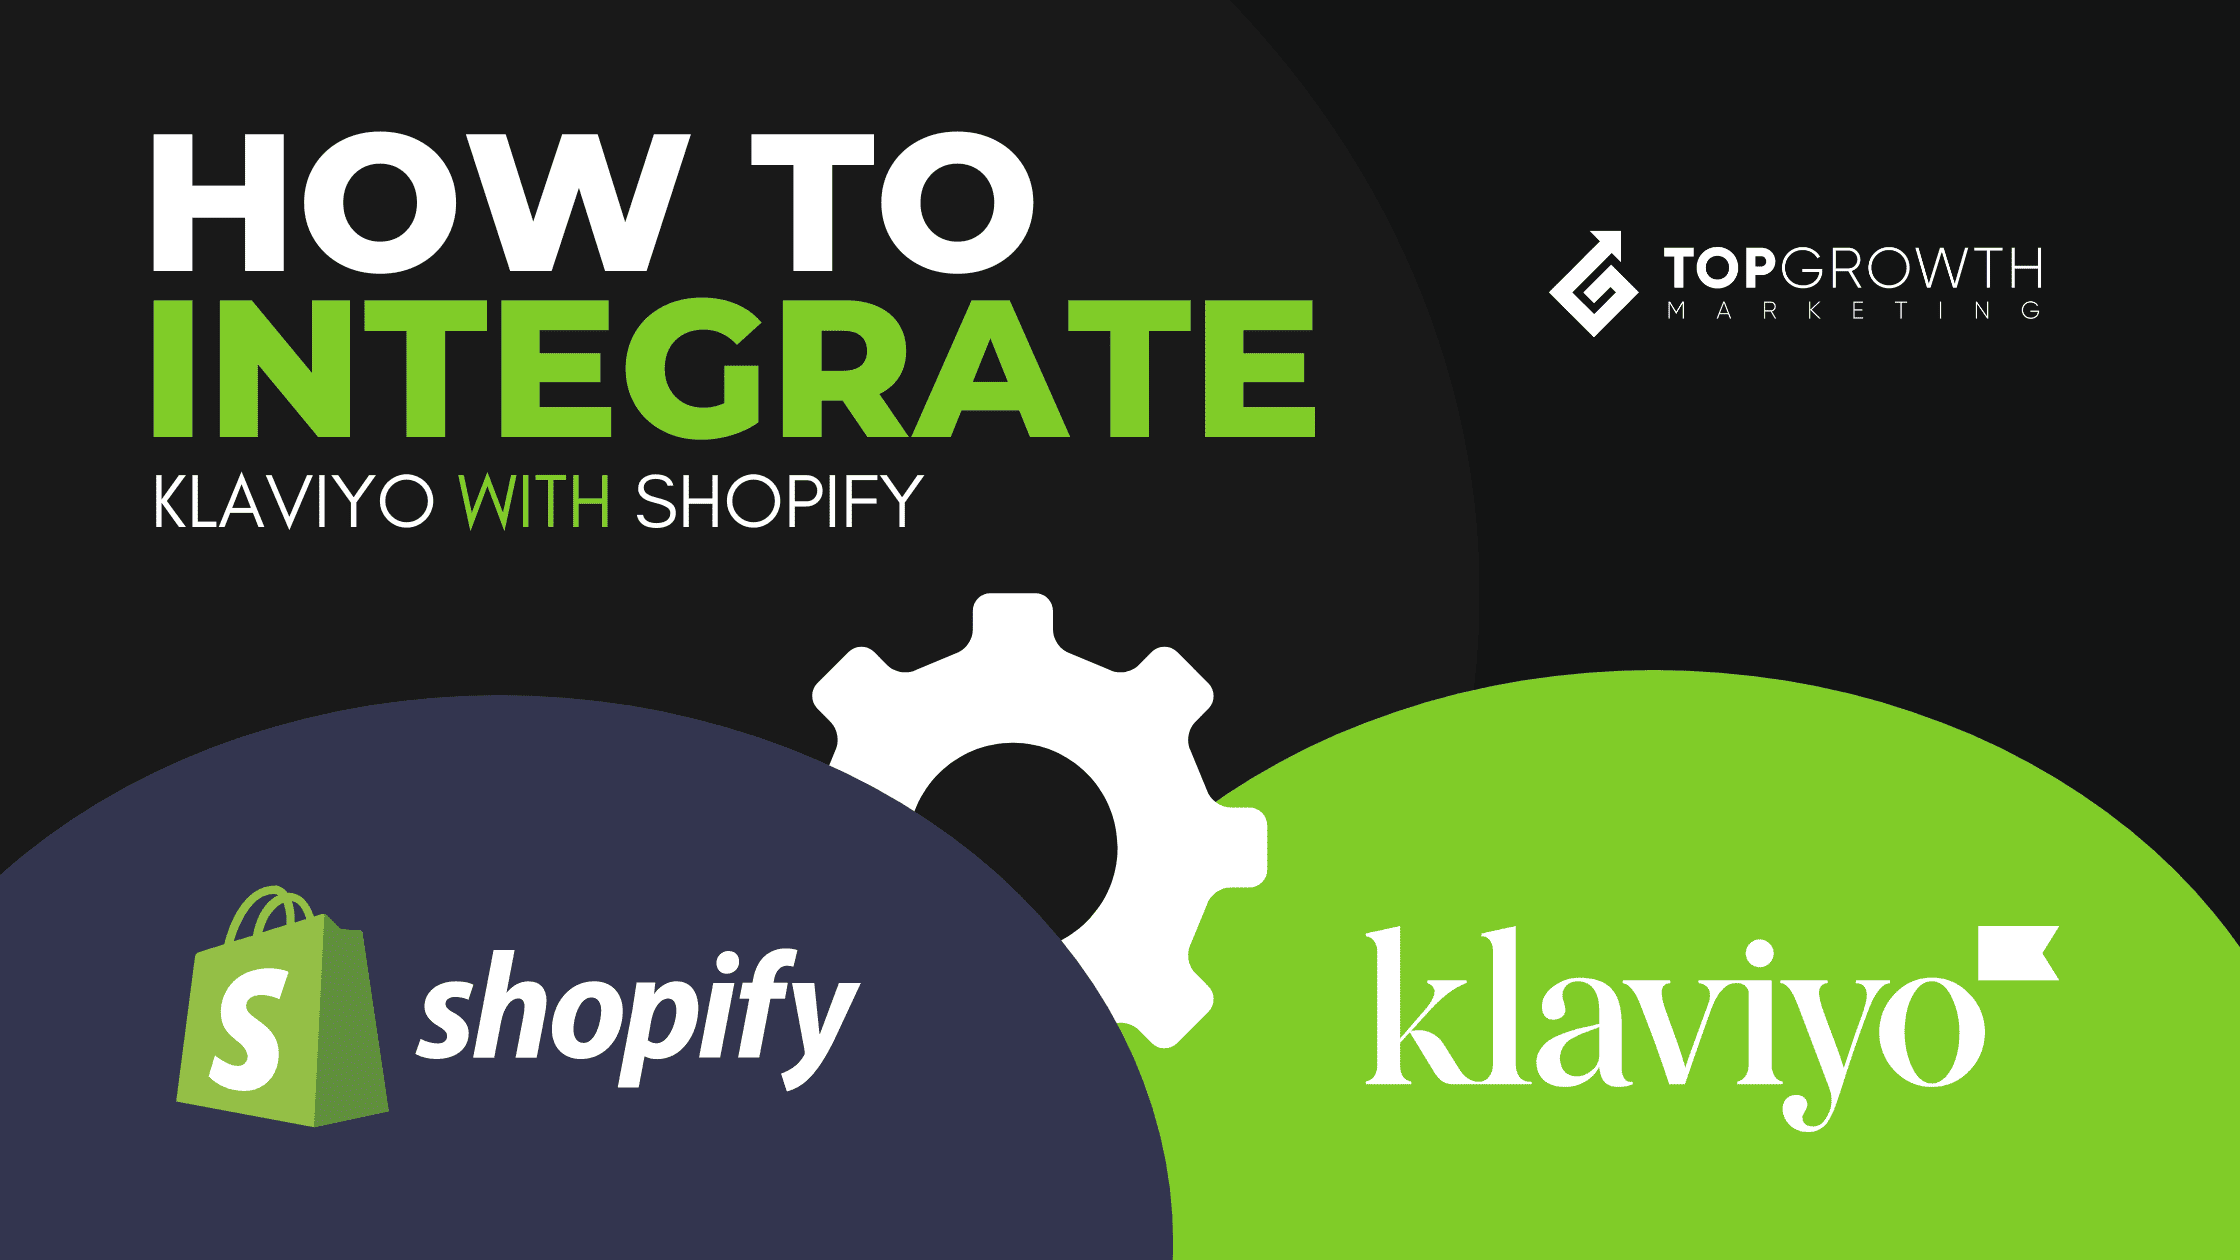 hopw to integrate klaviyo and shopify